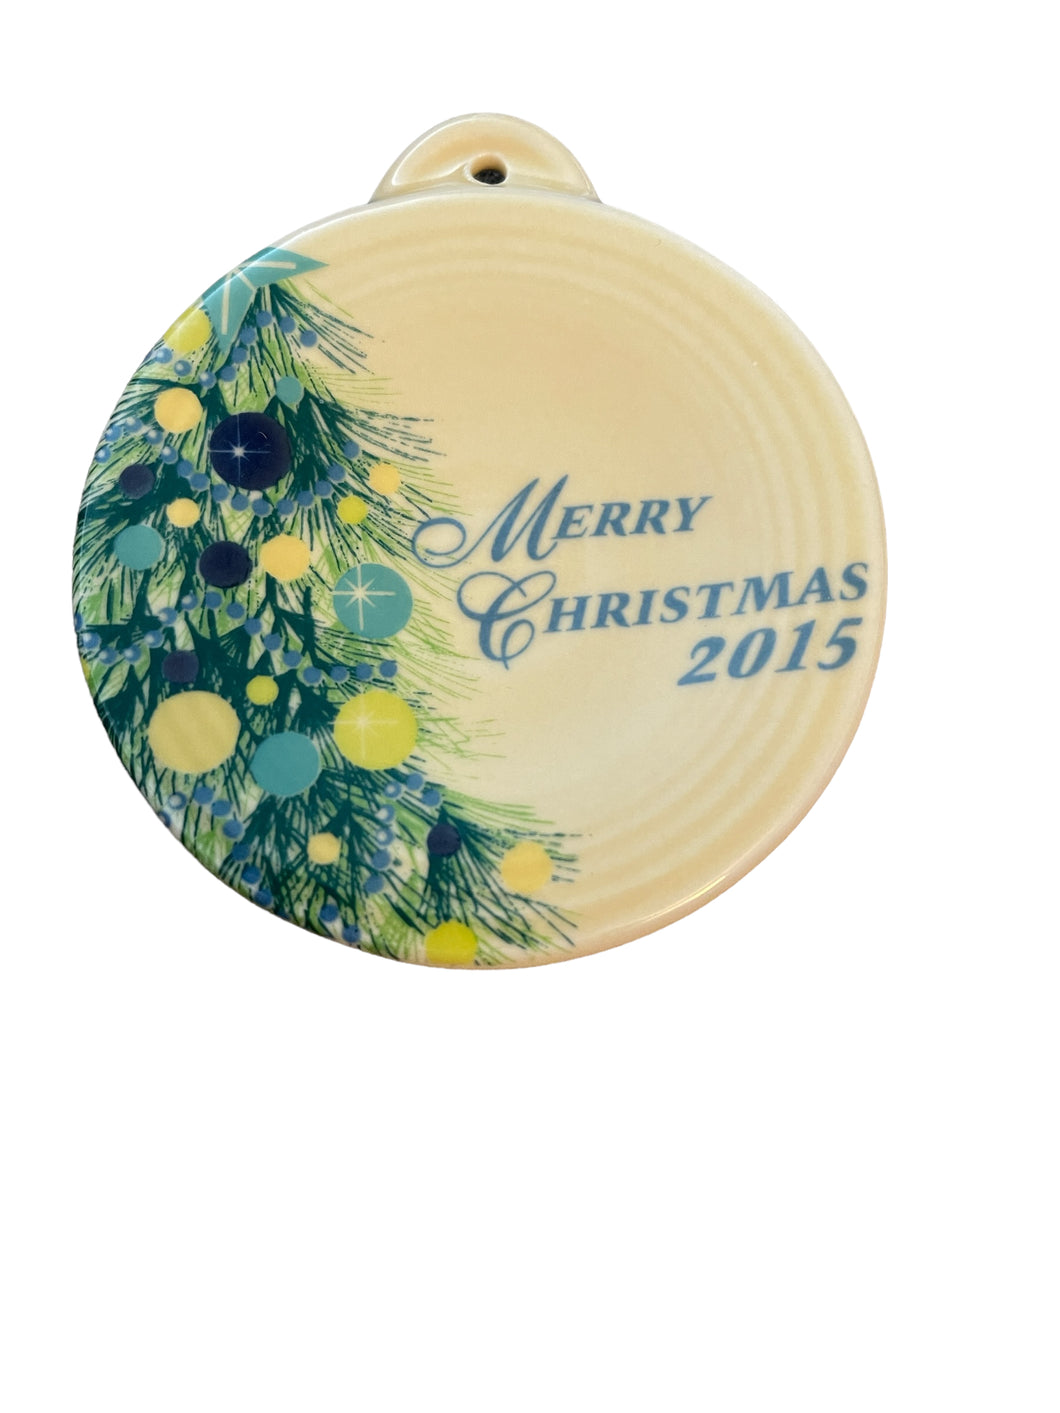 Fiesta Merry Christmas 2015 Ornament